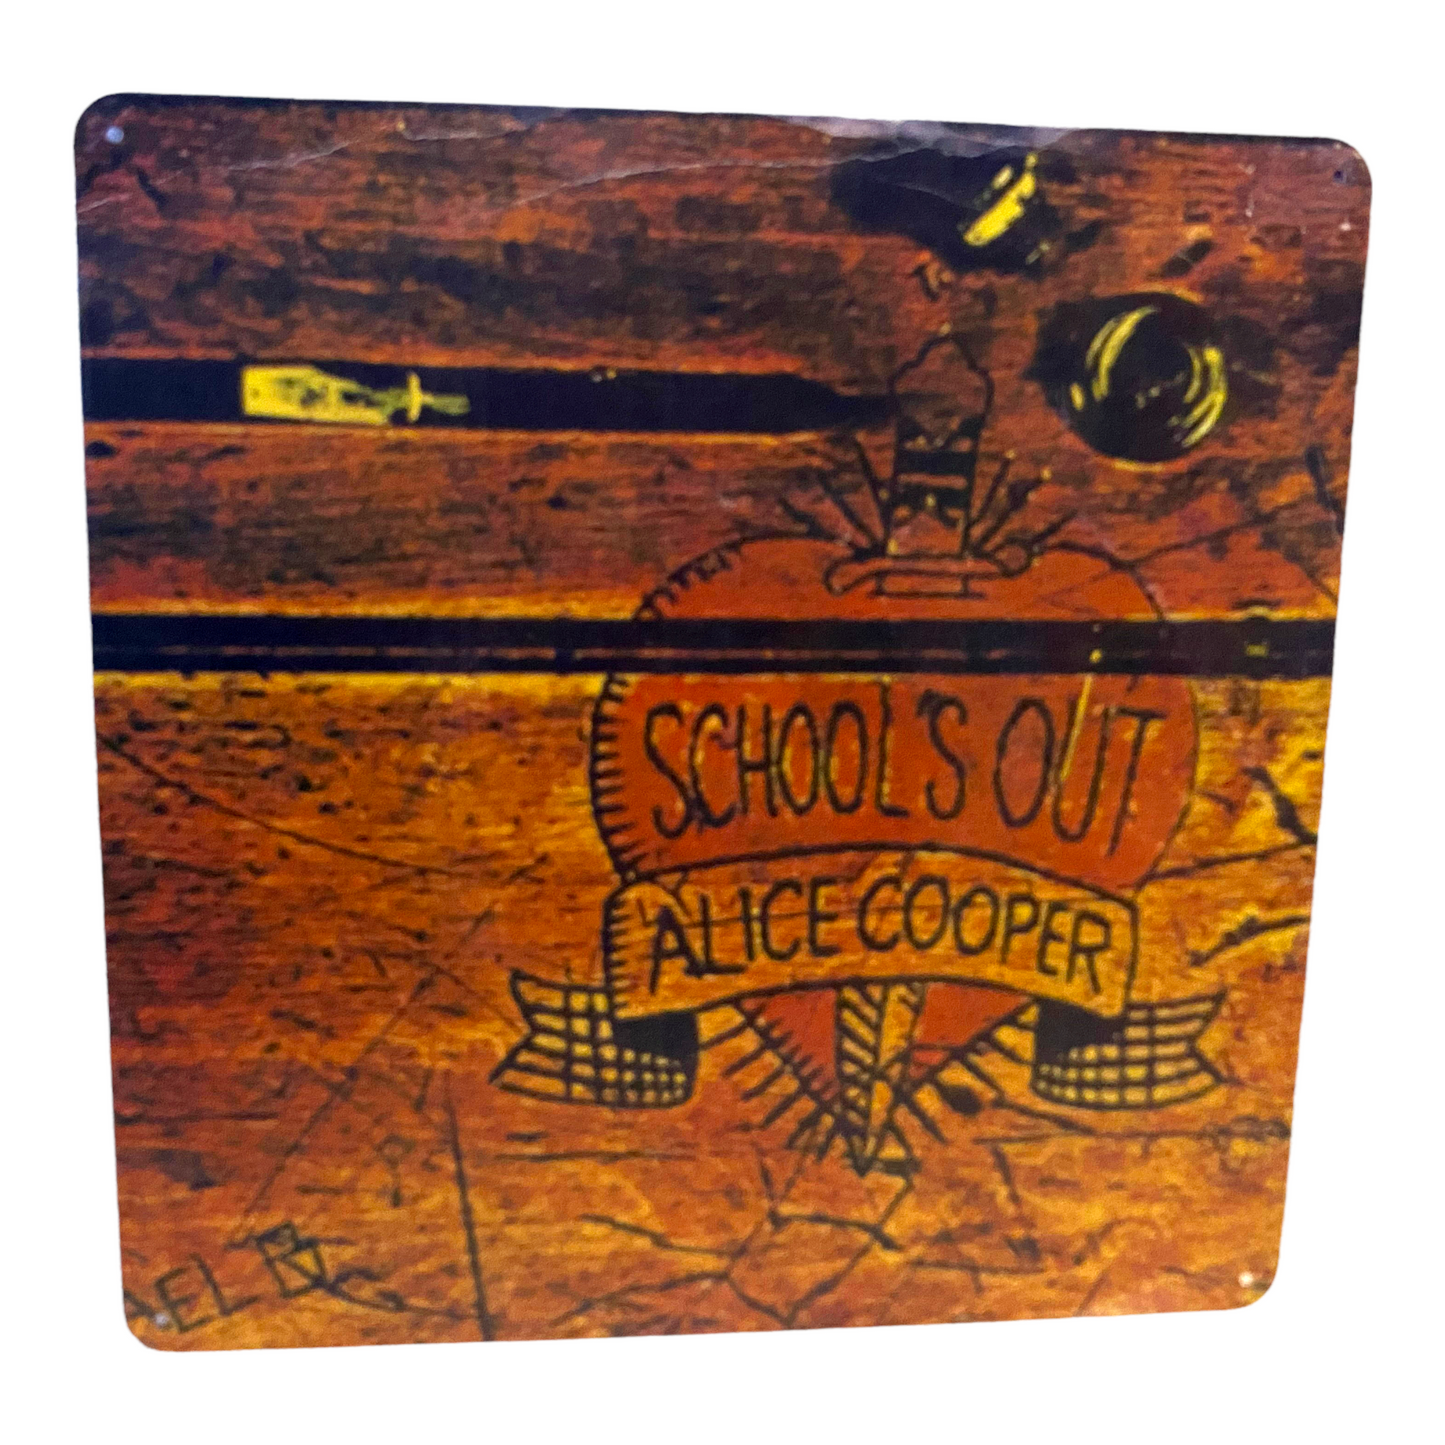 Alice Cooper School's Out Album Cover Metal Print Tin Sign 12"x 12"